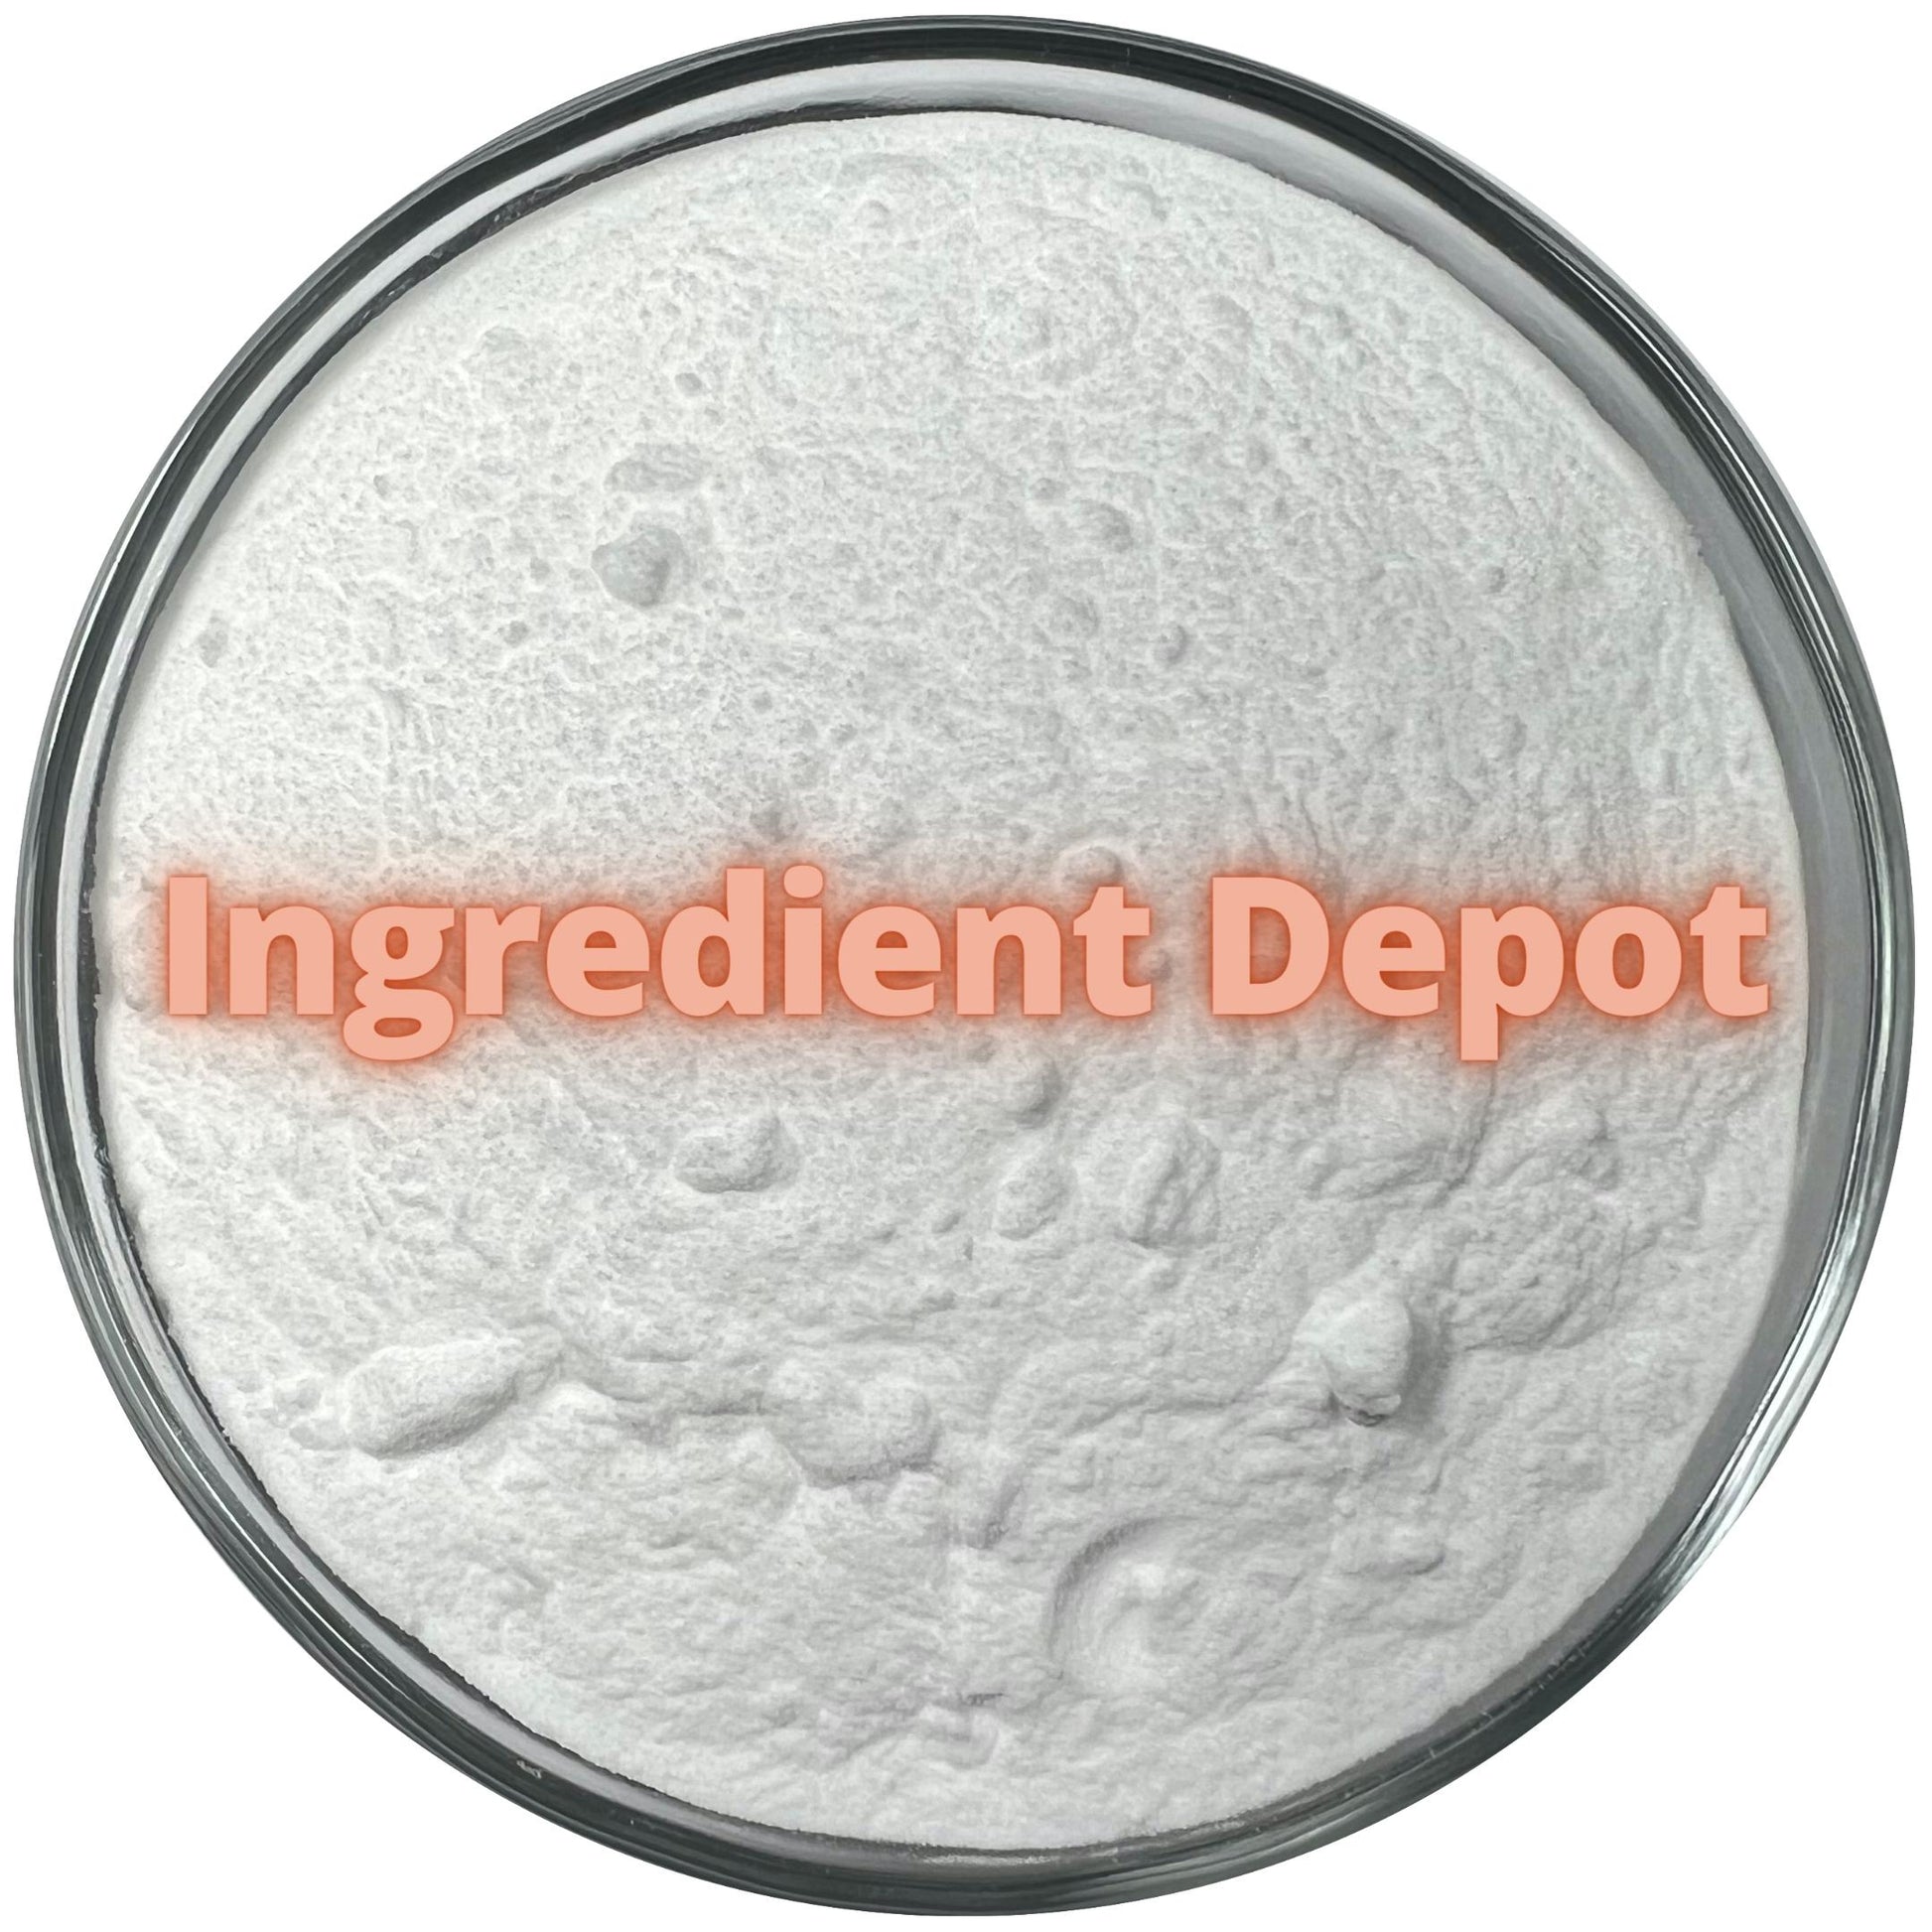 Sodium Bicarbonate No. 1 Powdered, USP Grade 12 kgs Raw Material